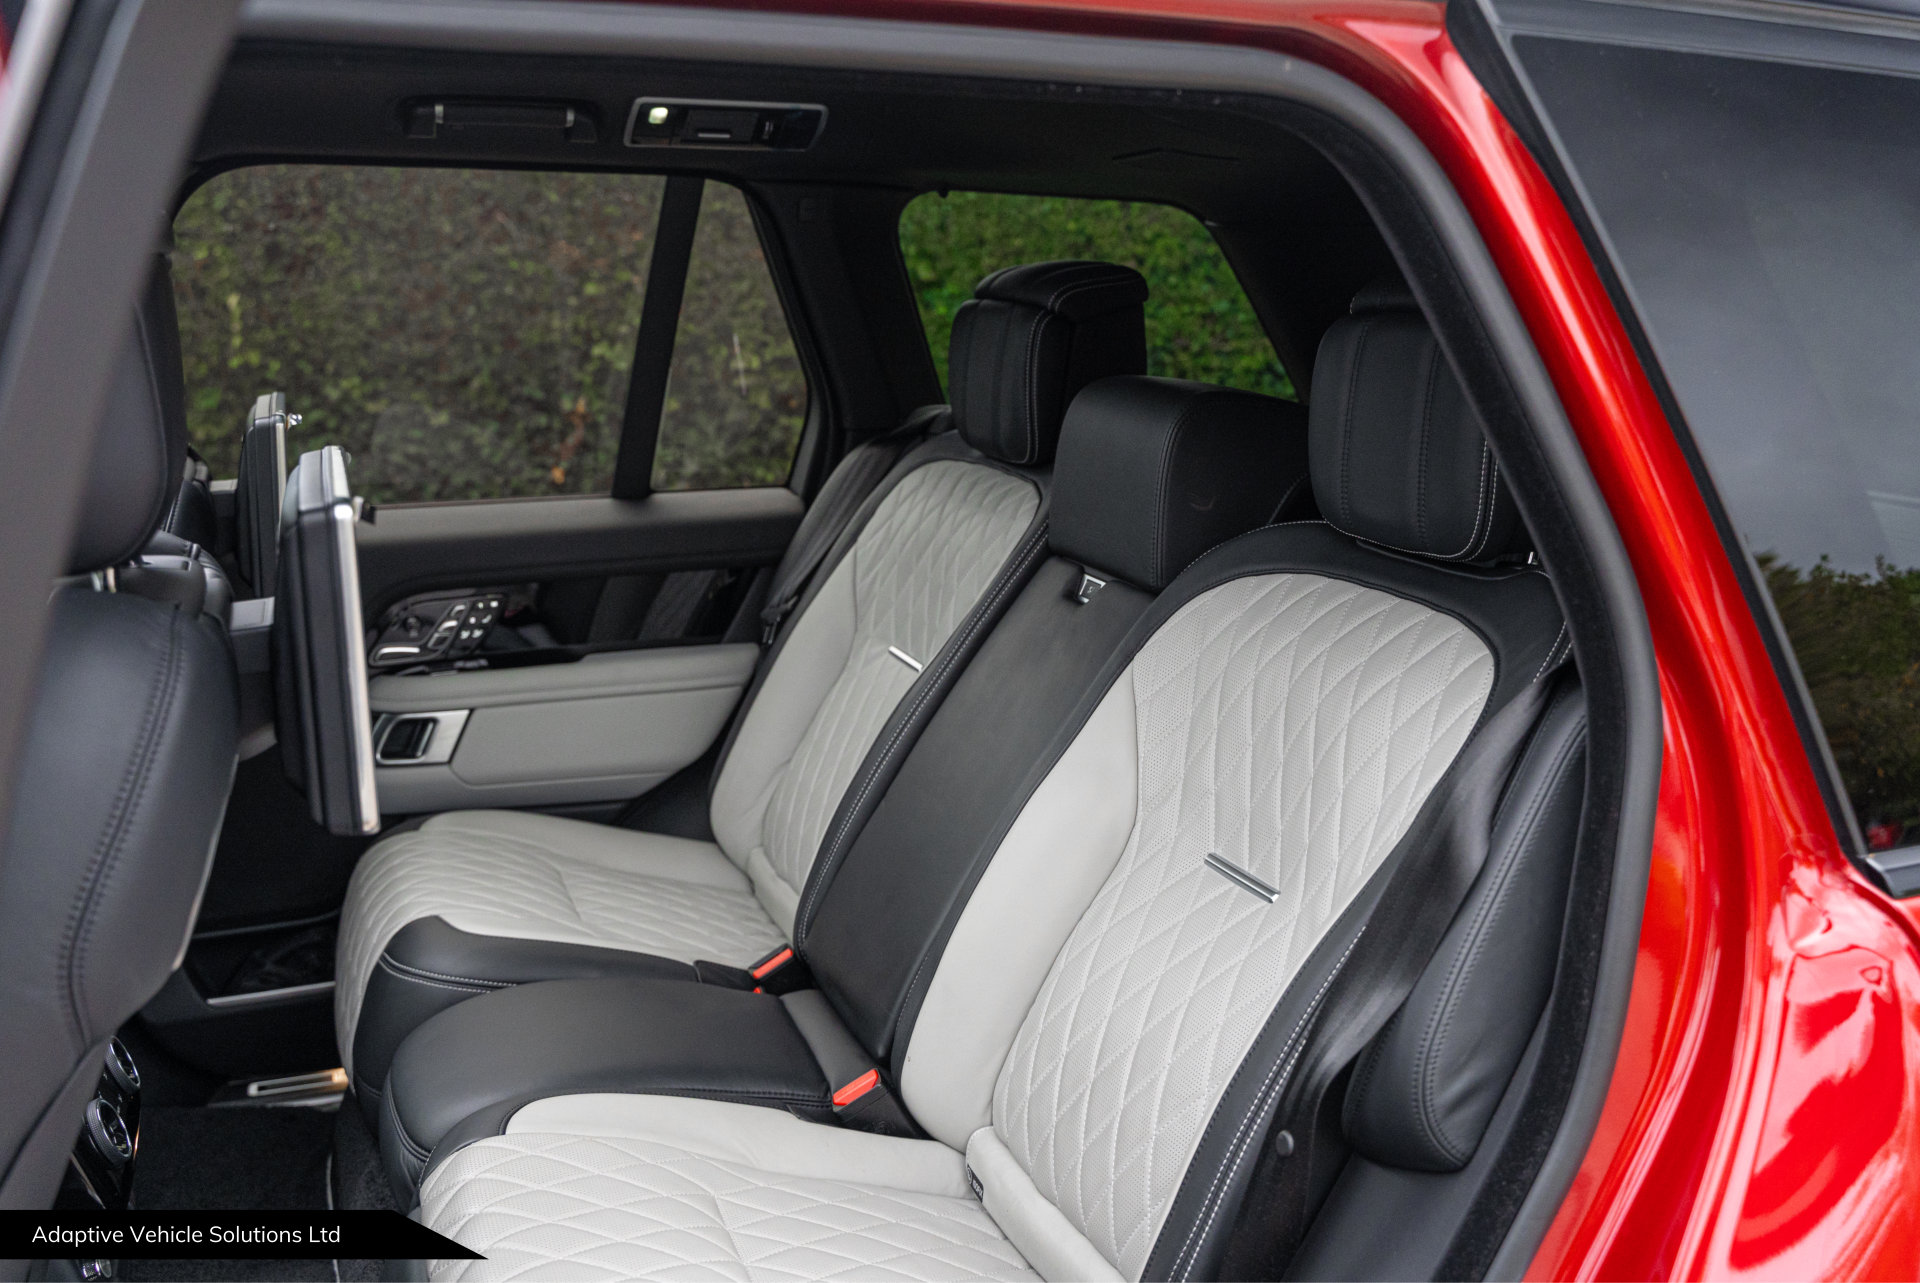 2019 Range Rover SVAutobiography rear passenger seats